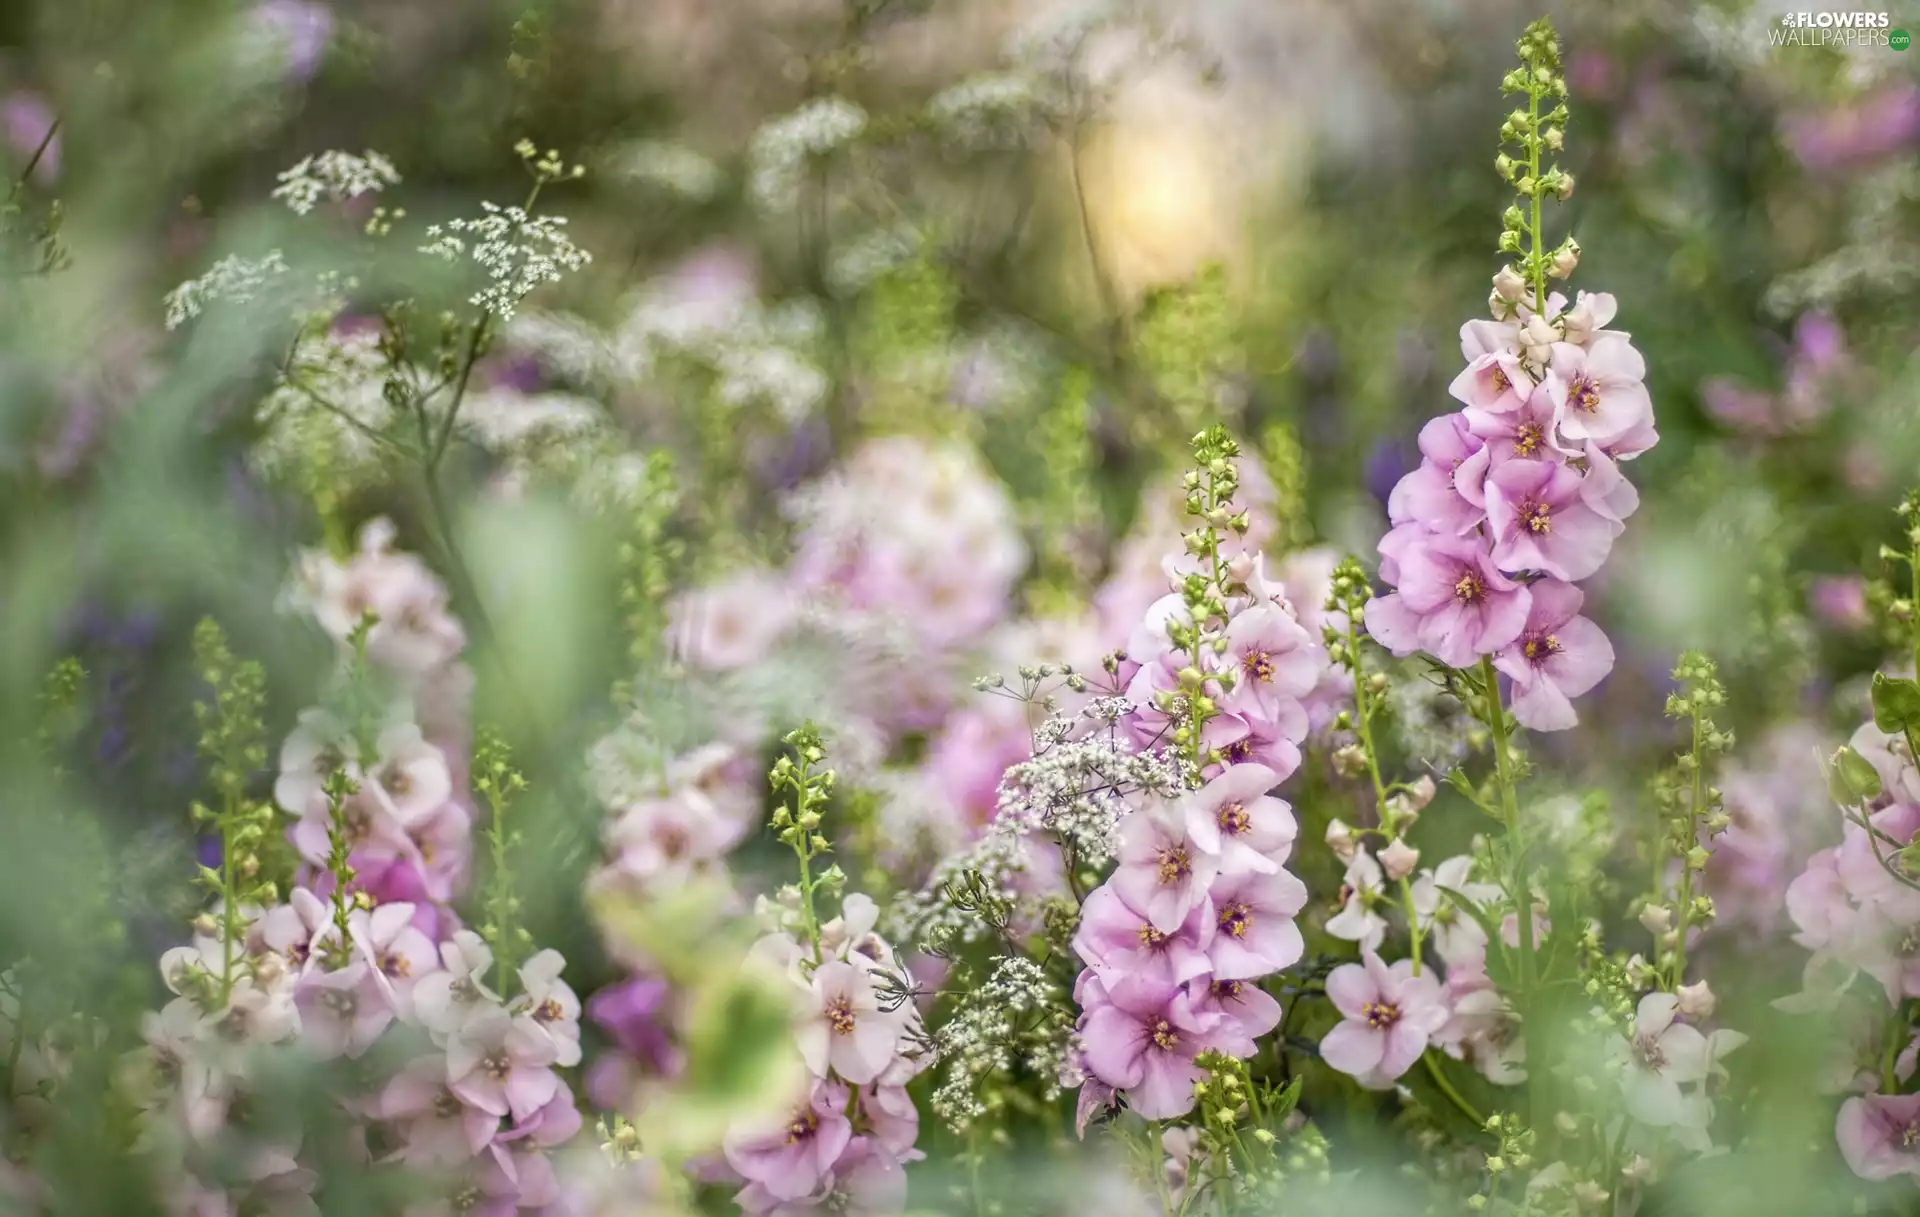 Flowers, Hollyhocks, blurry background, Pink